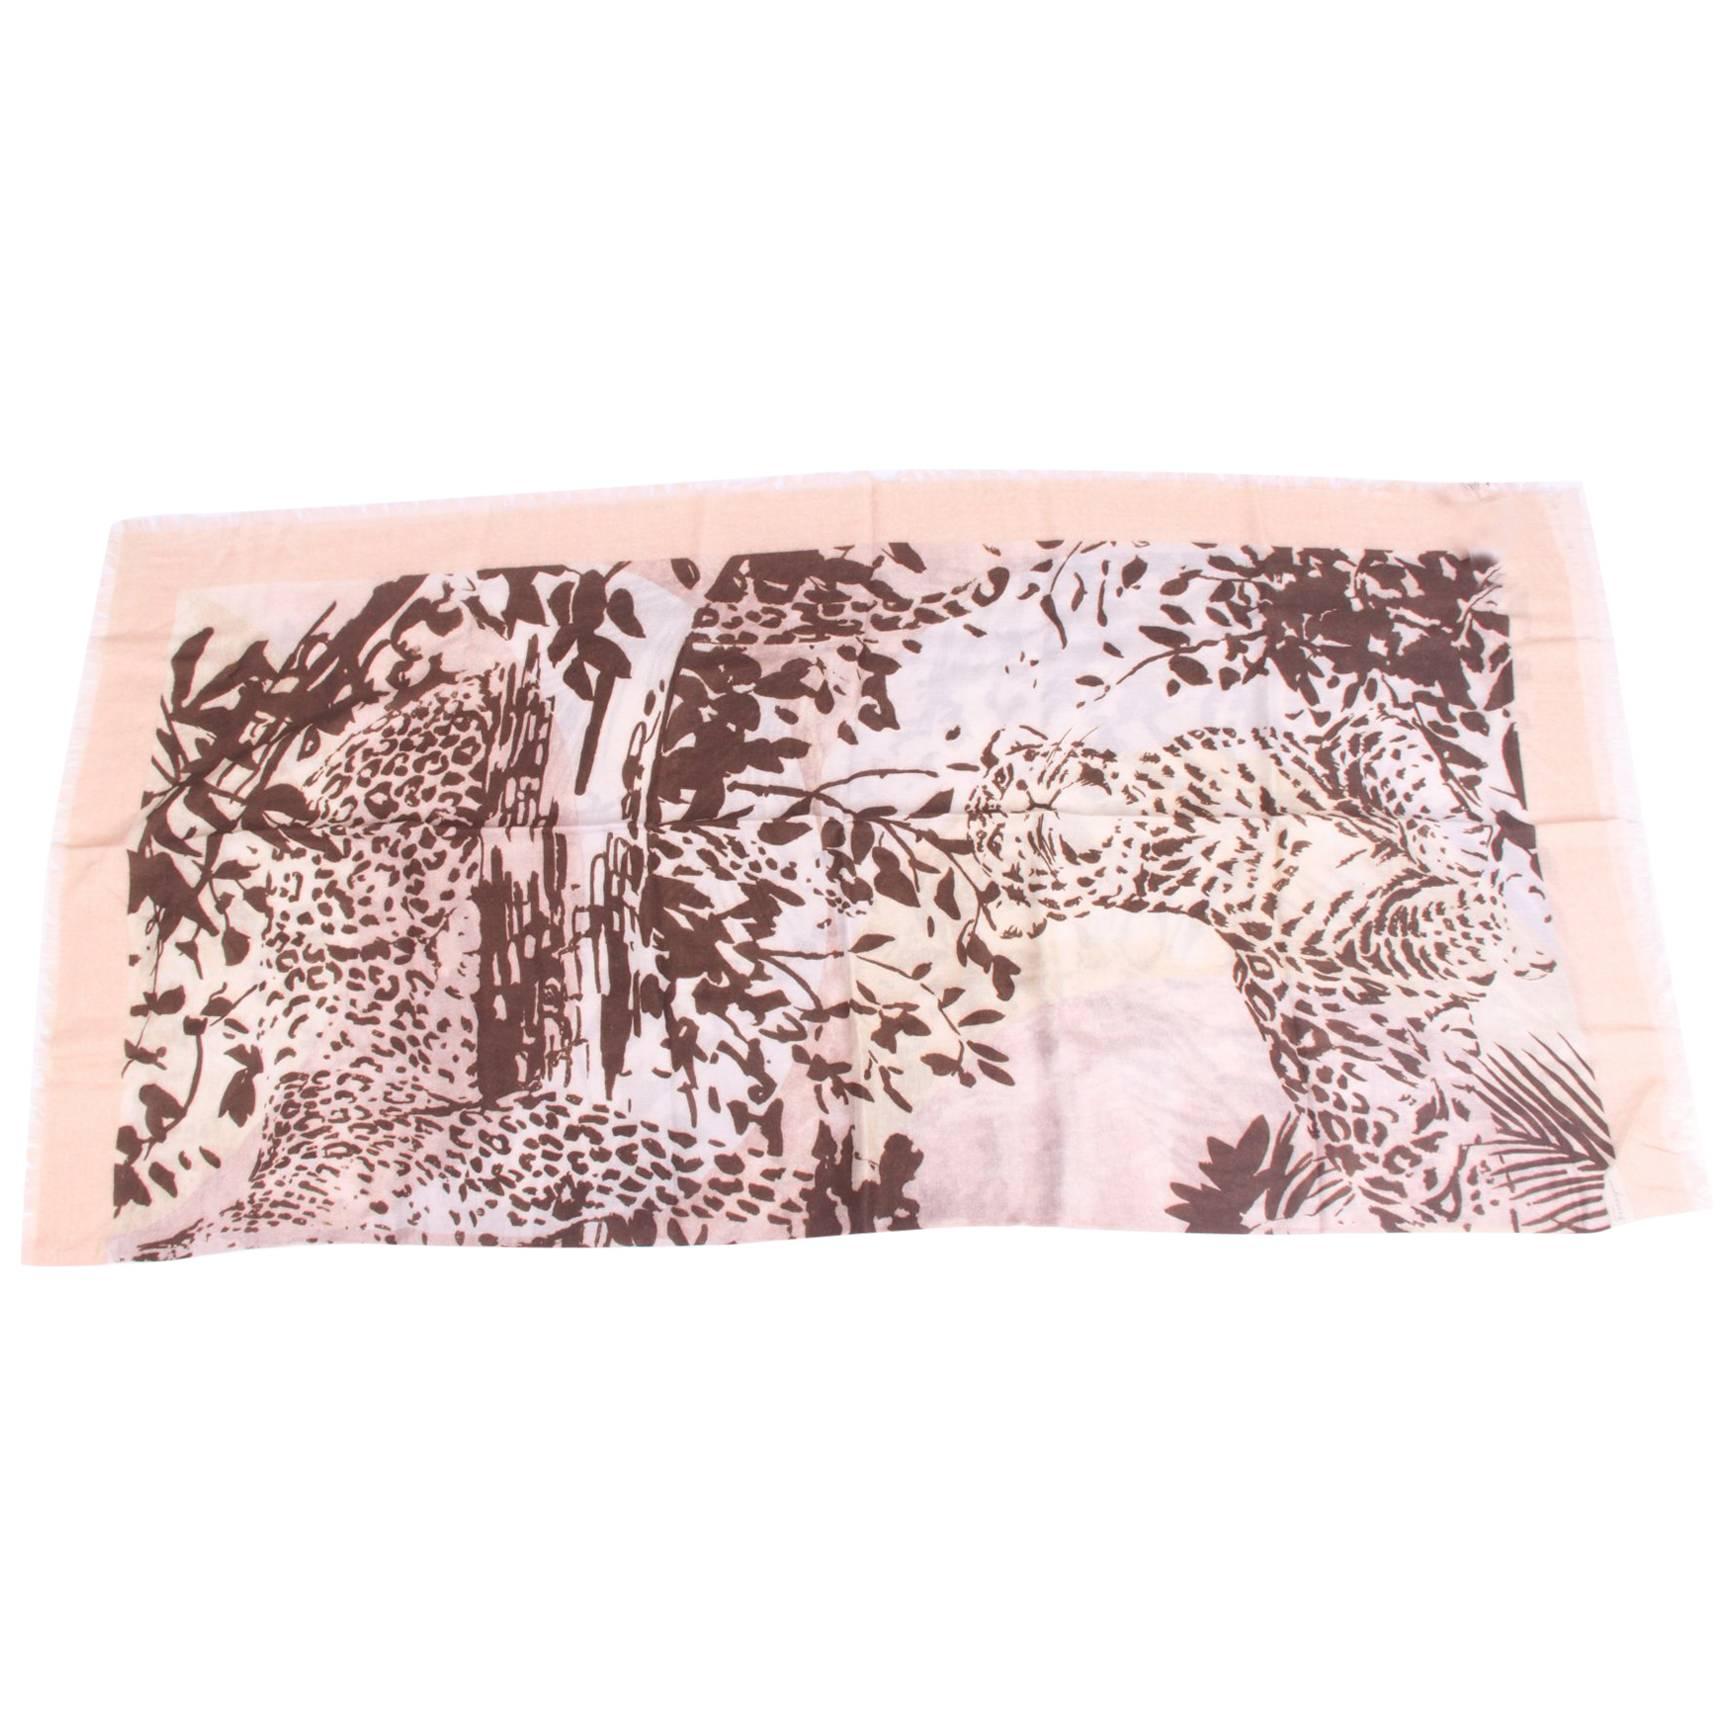 Salvatore Ferragamo Scarf Leopard Print - brown/gray/beige For Sale